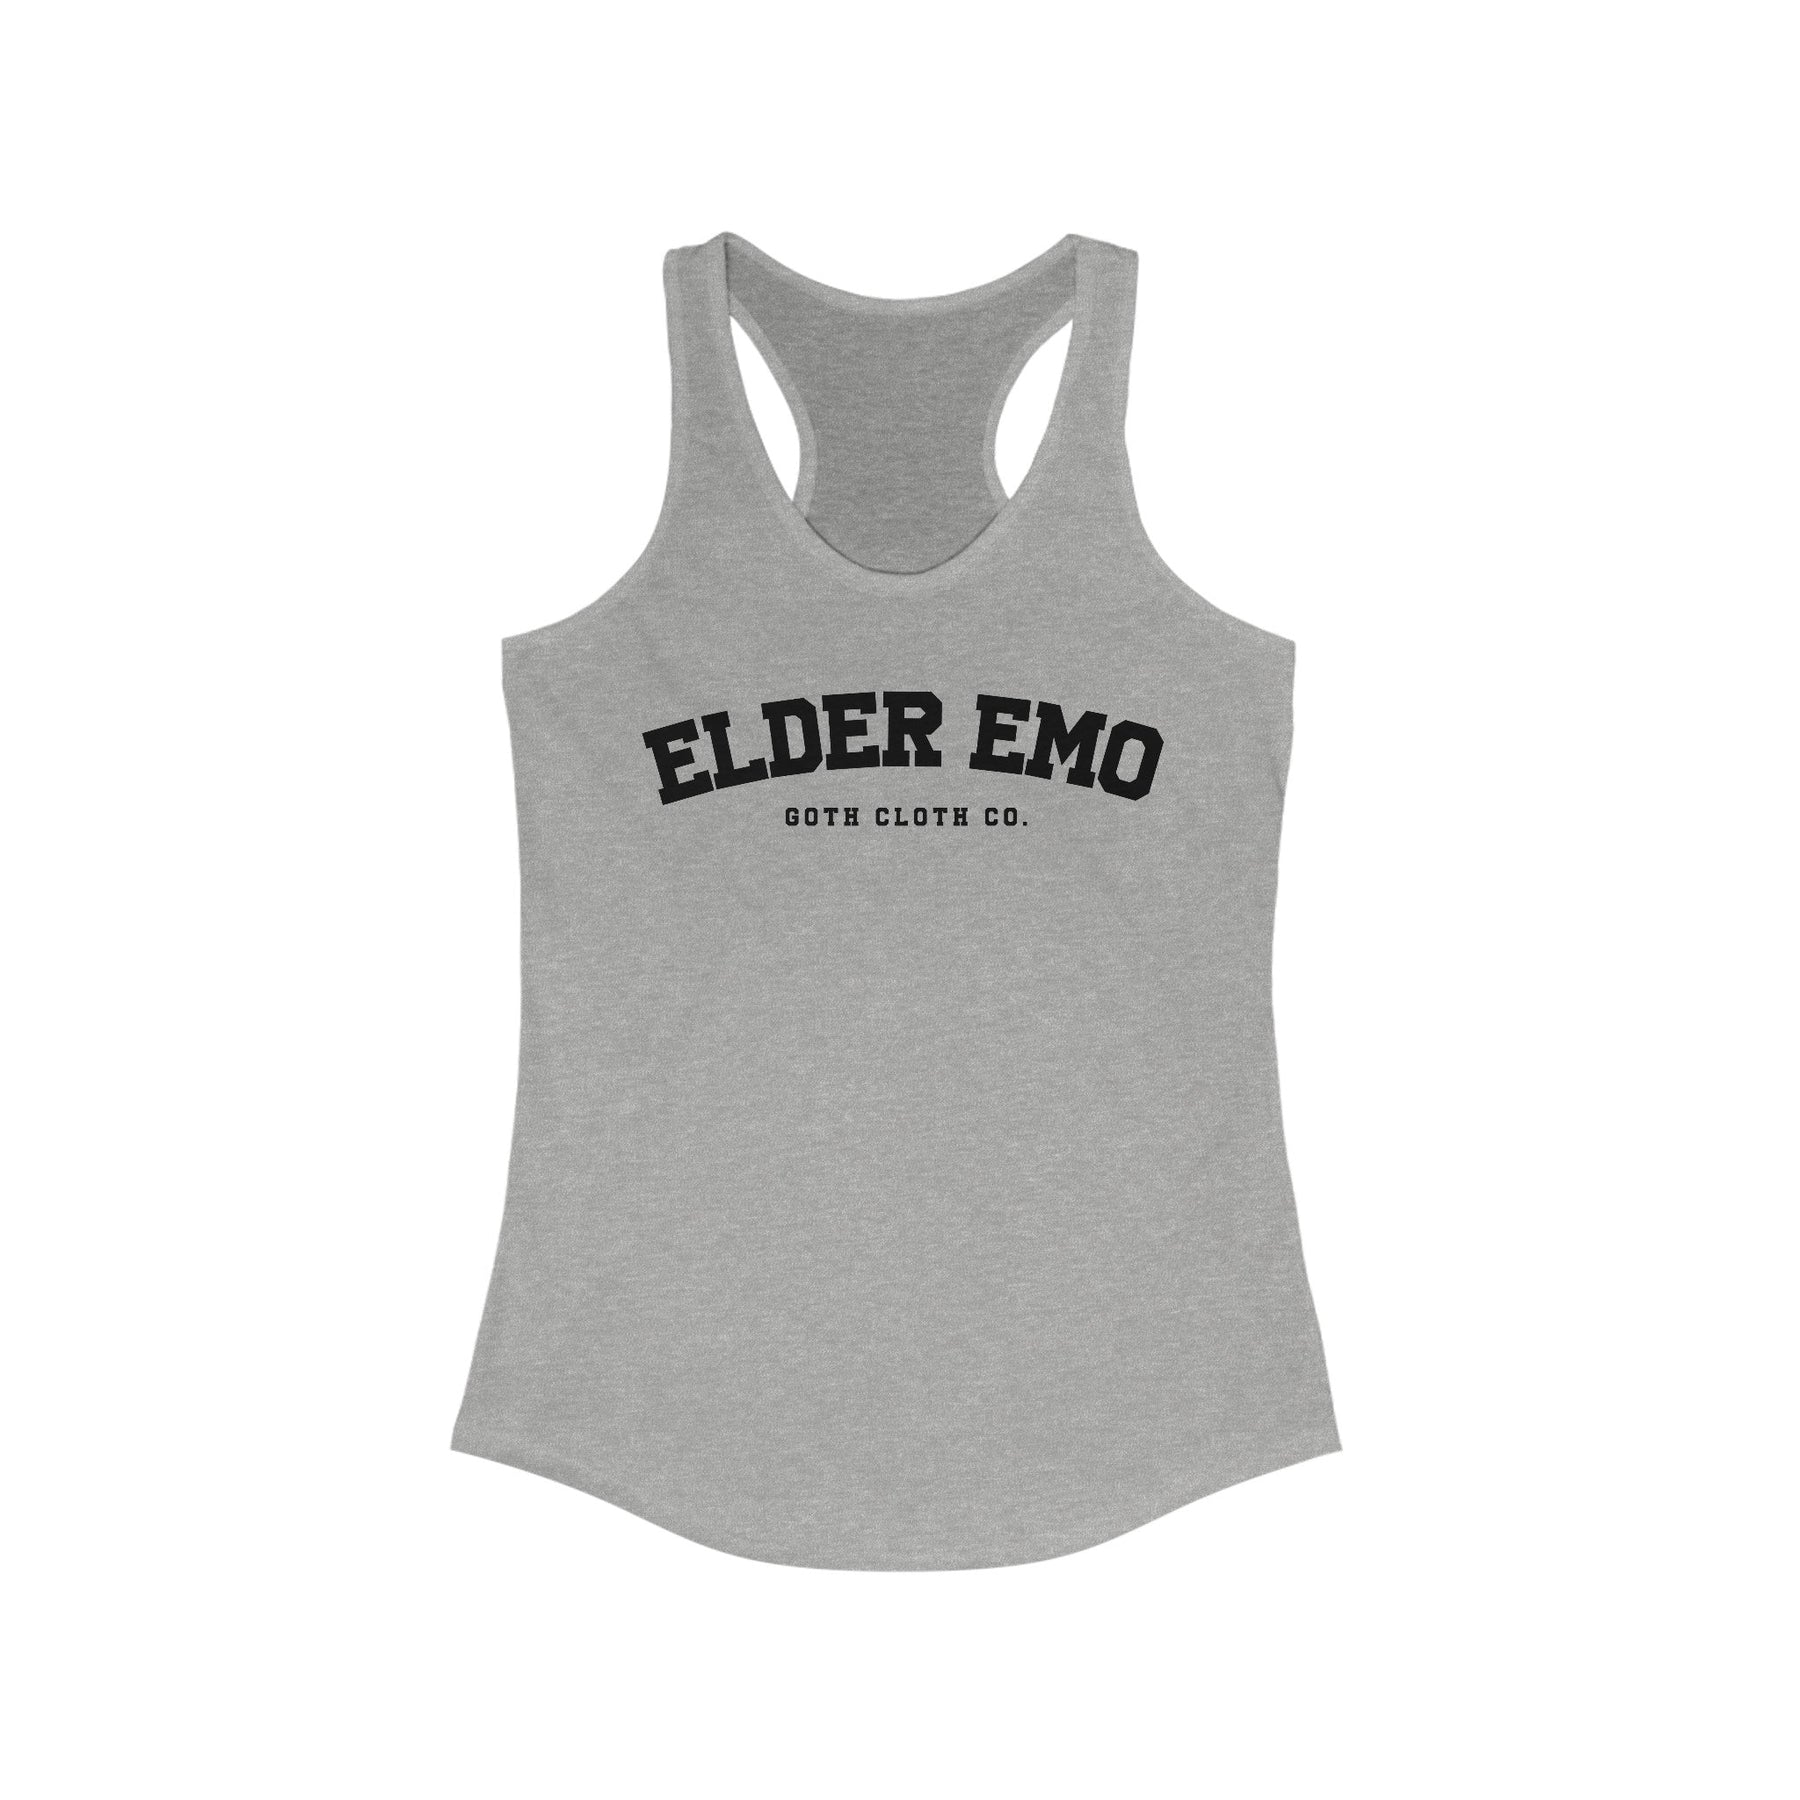 Elder Emo College Women's Racerback Tank - Goth Cloth Co.Tank Top17877162680882395002